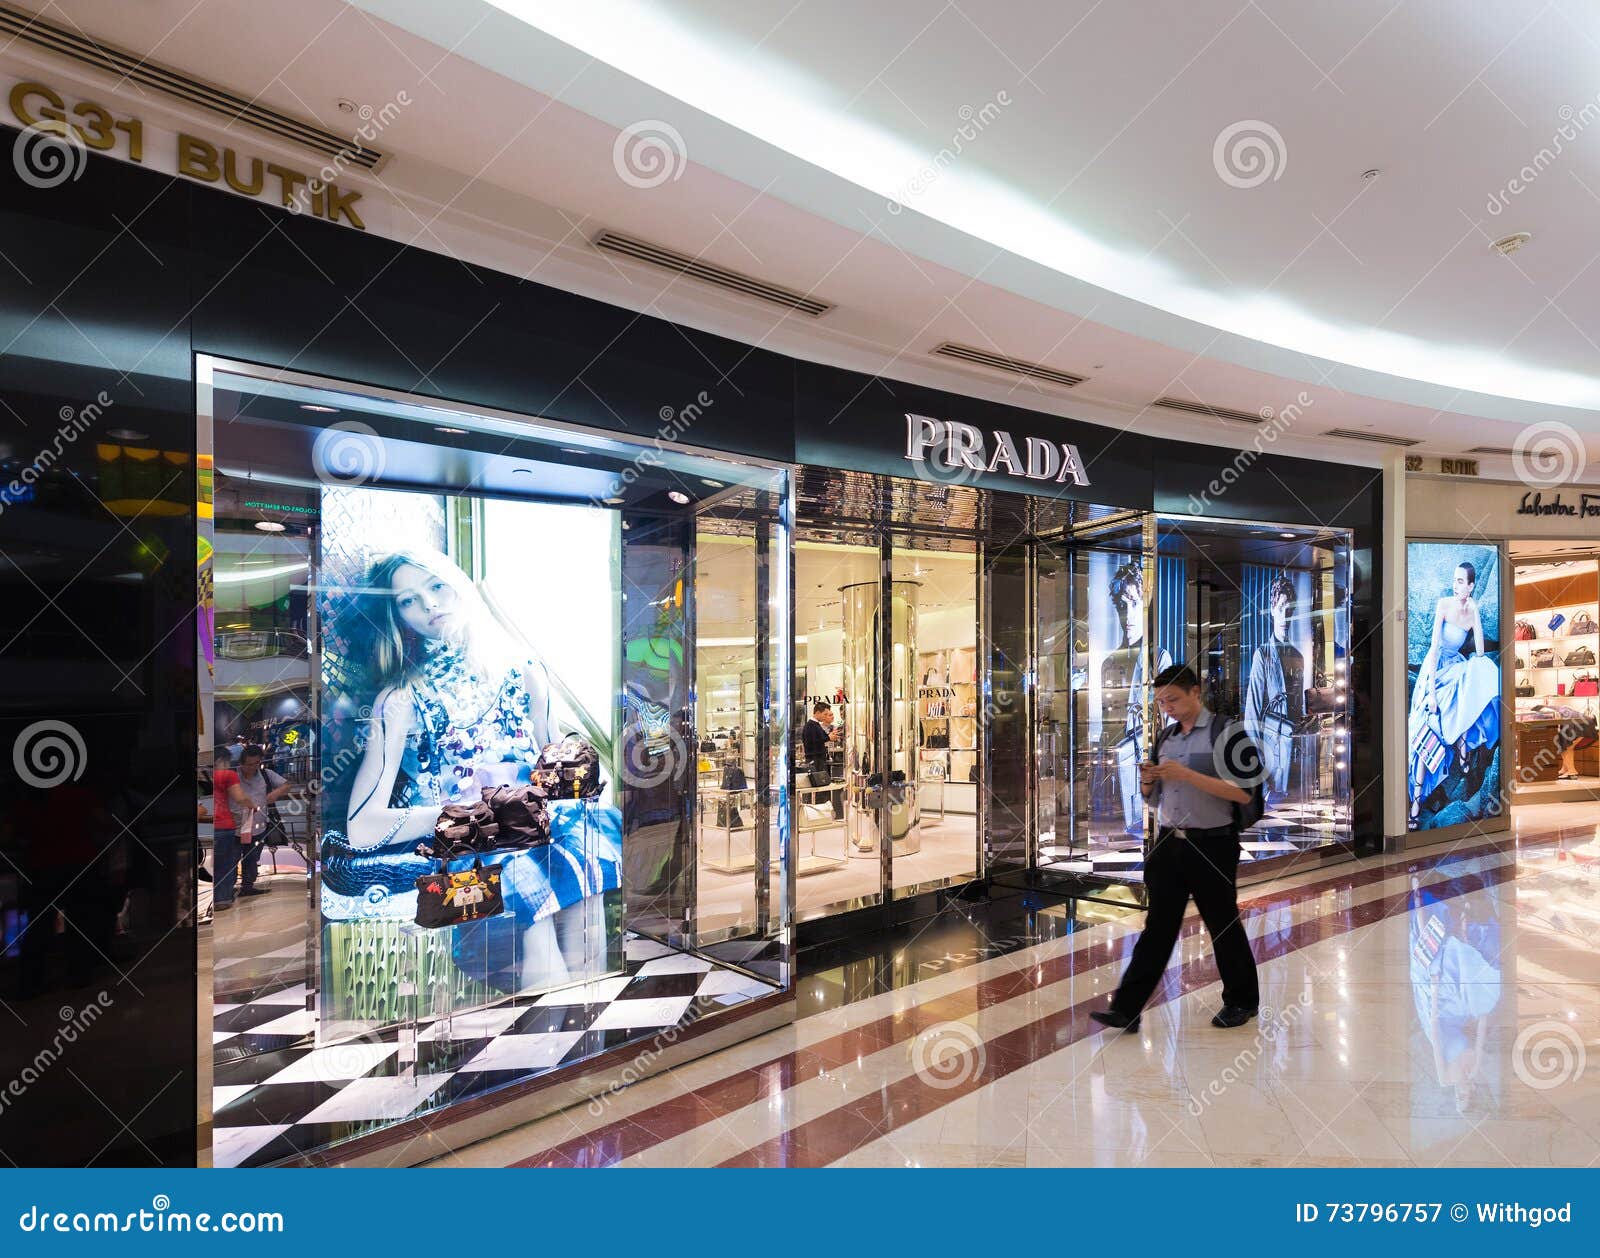 Prada Store in Suria KLCC, Kuala Lumpur Editorial Photography - Image ...